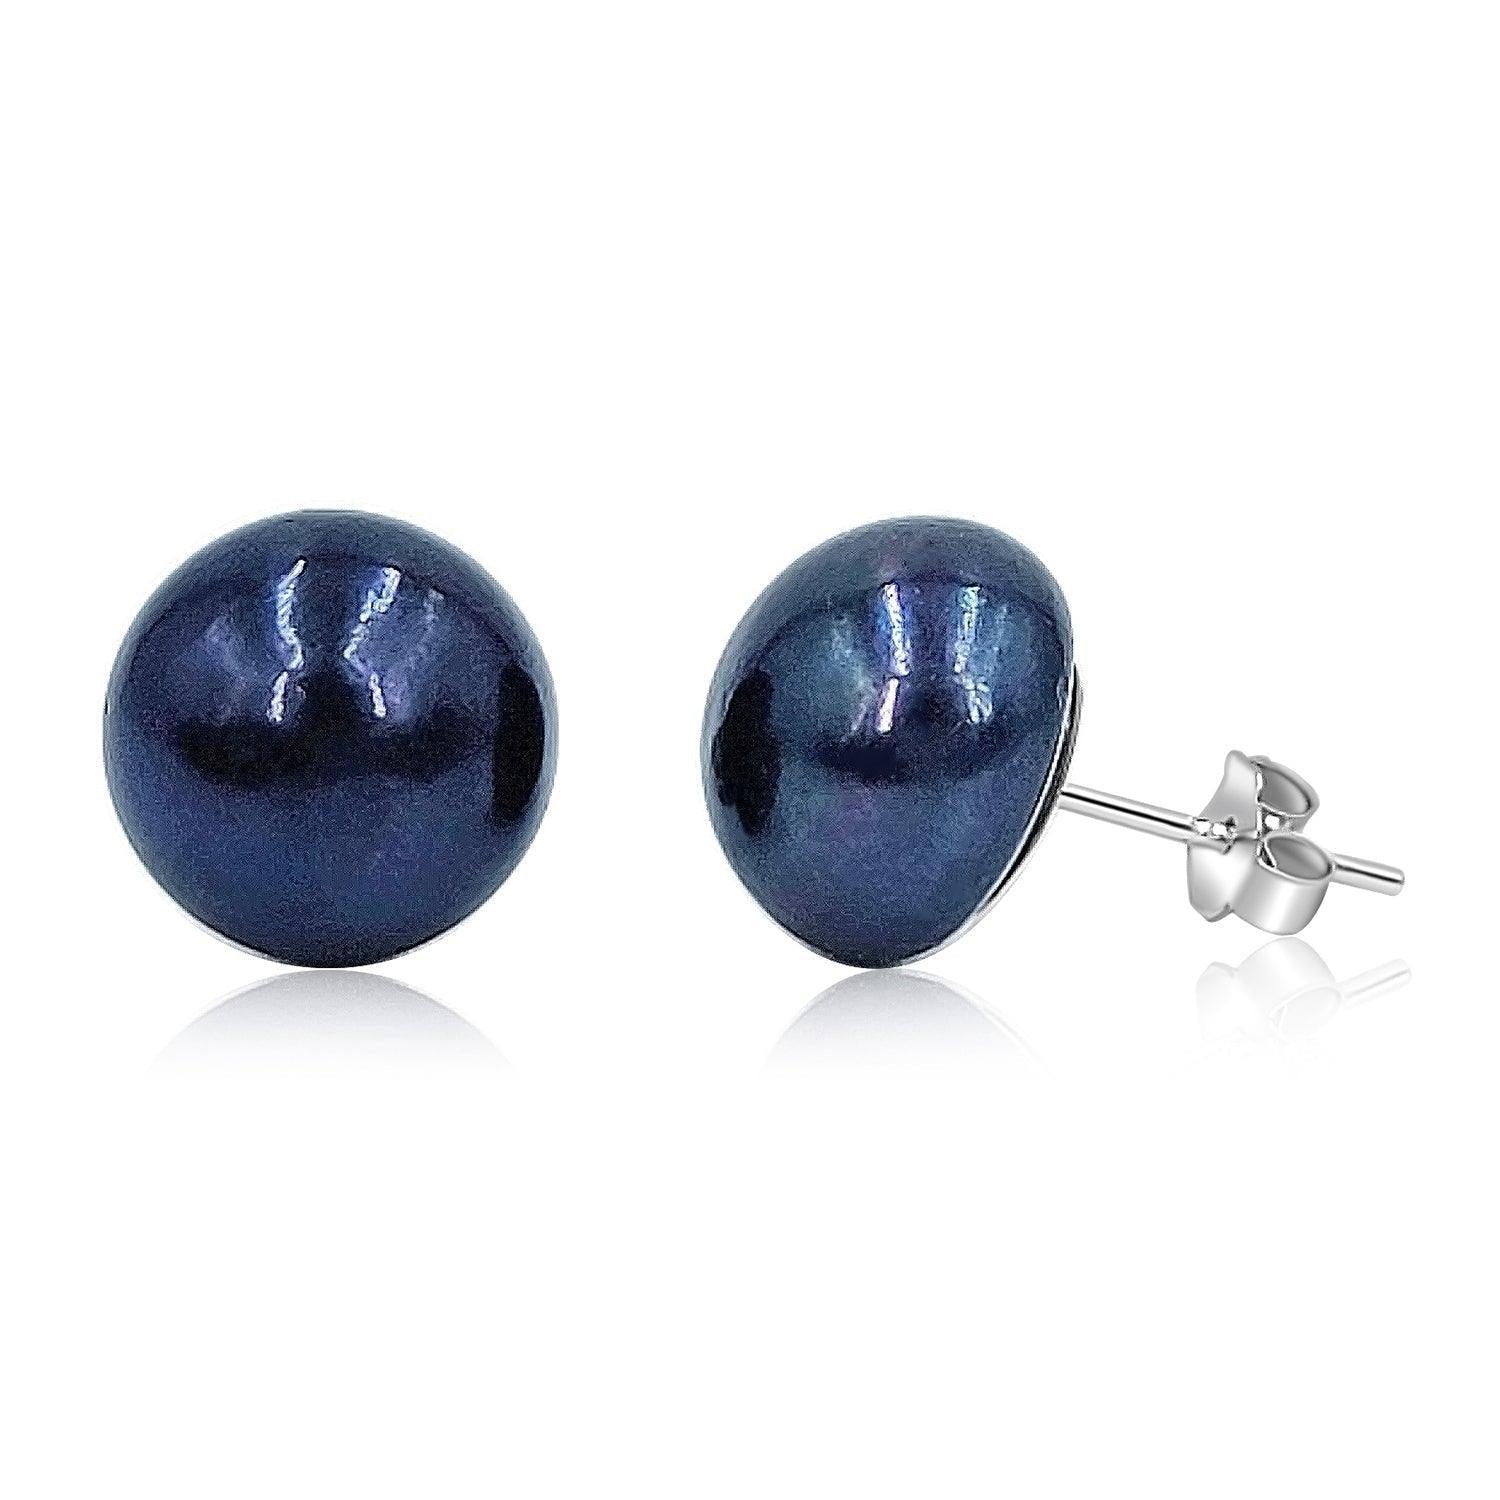 Large 12mm black freshwater pearls stud earrings - Uniquelan Jewelry